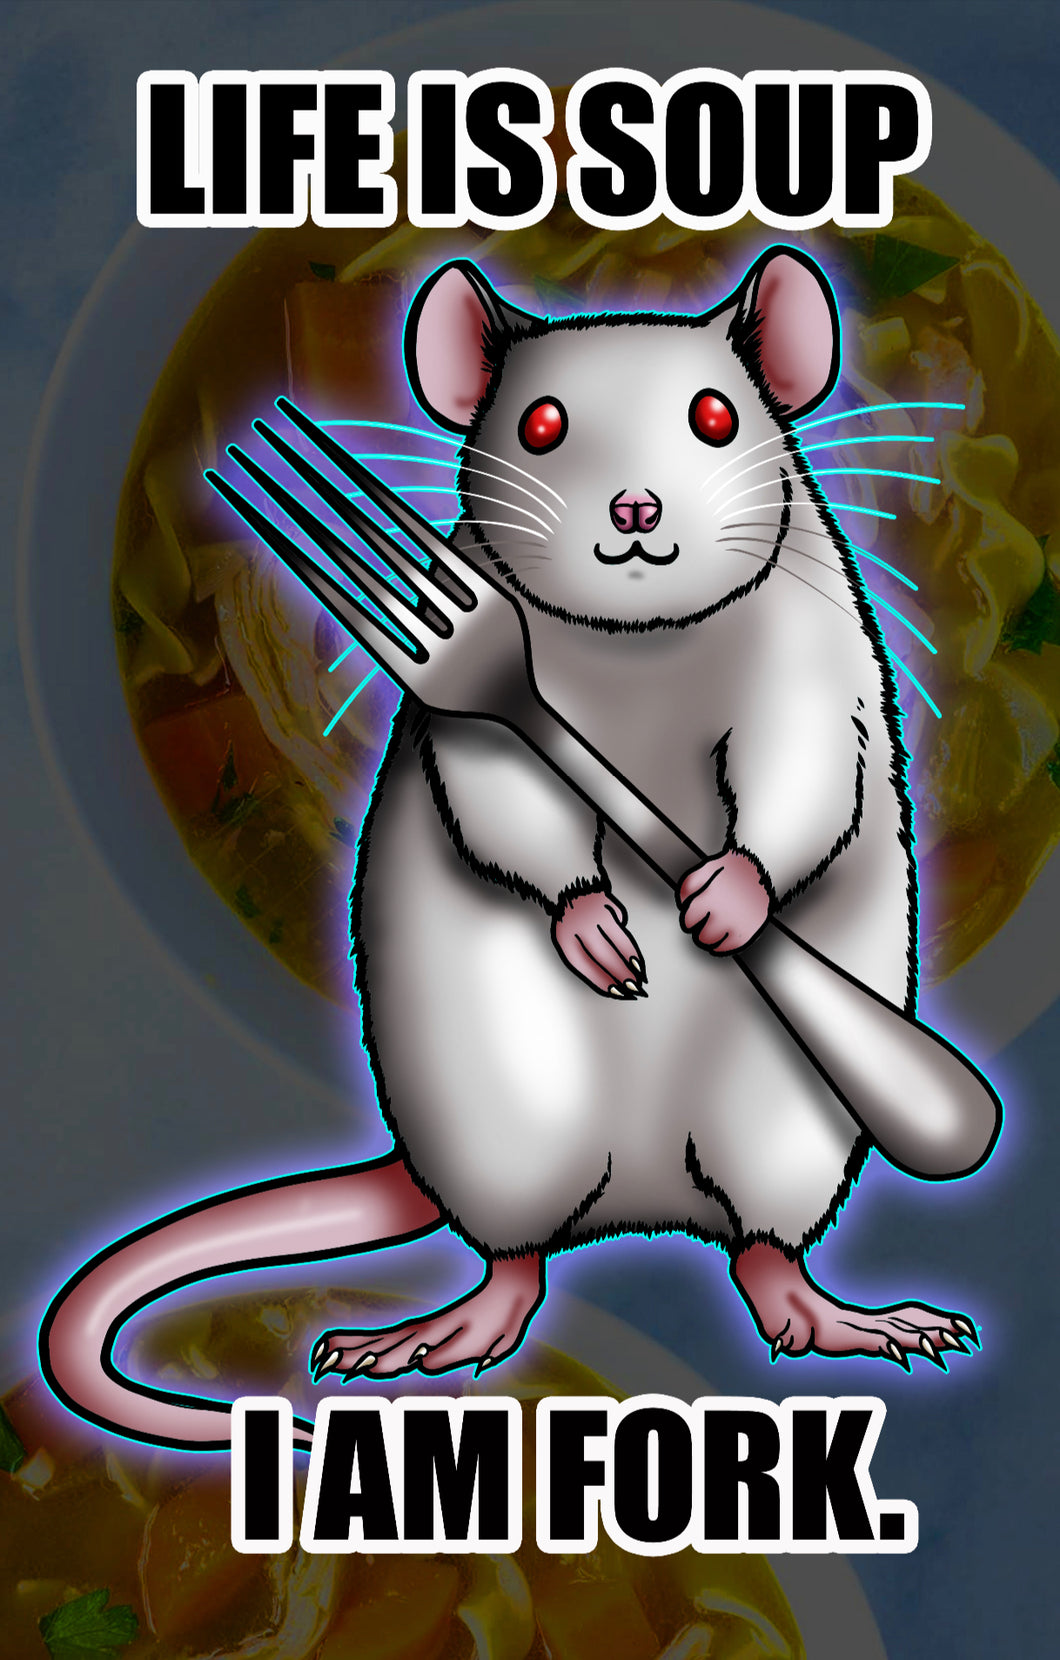 Life is soup, I am fork. White Mouse Rat Meme - Art Print Poster